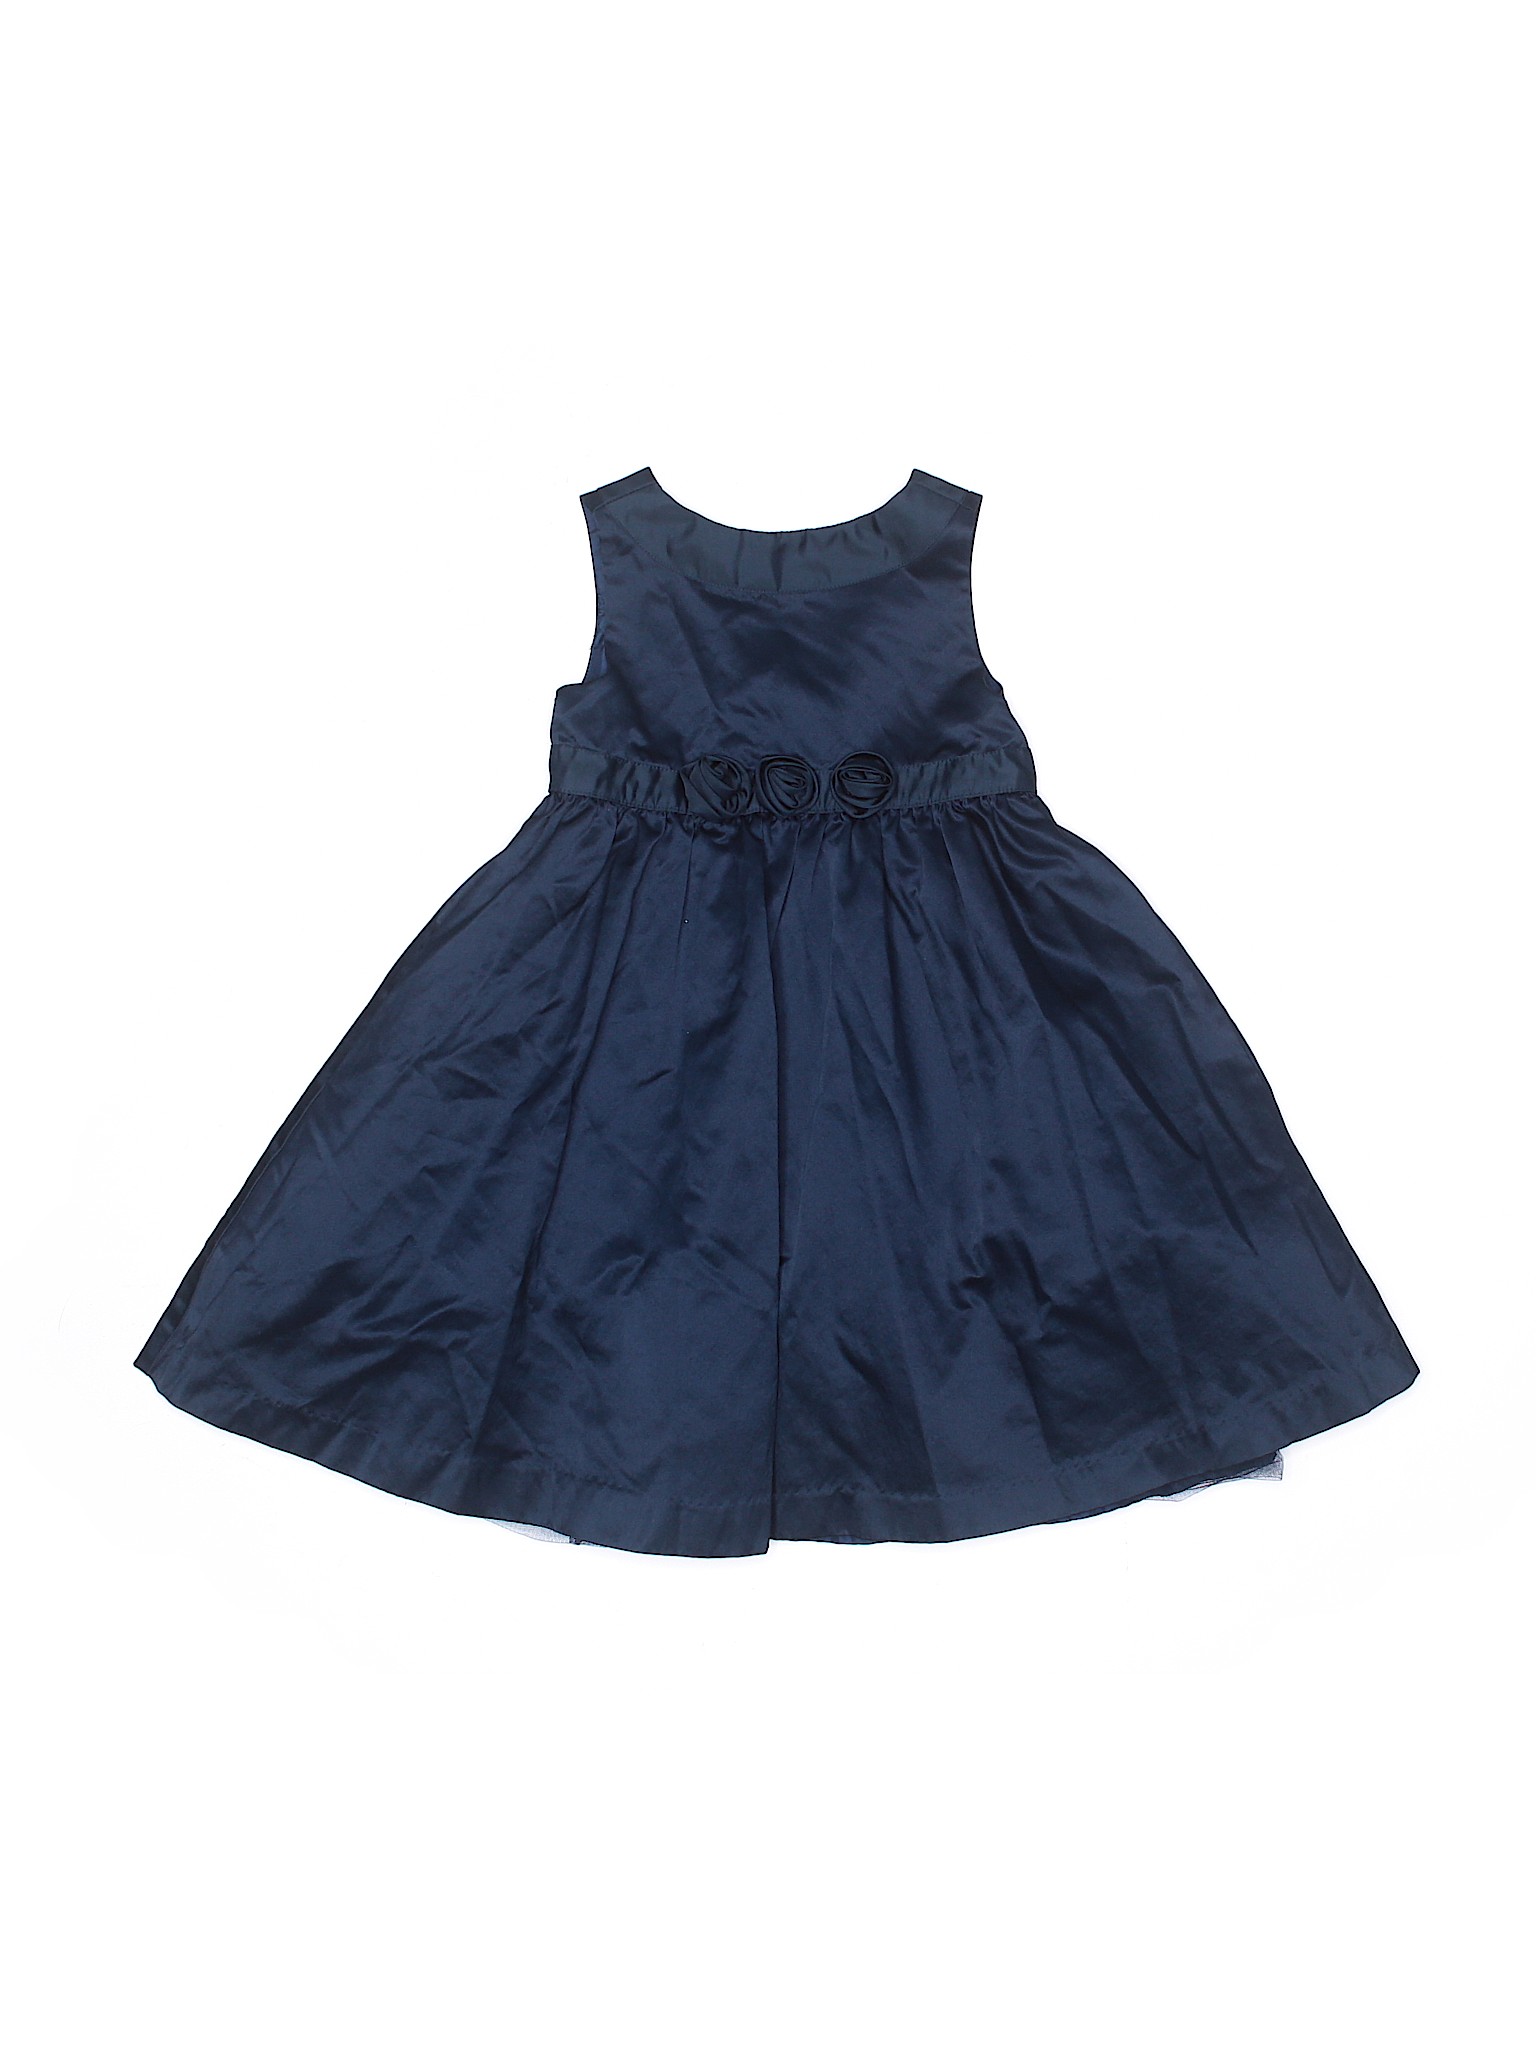 Gymboree Girls Blue Special Occasion Dress 3 | eBay